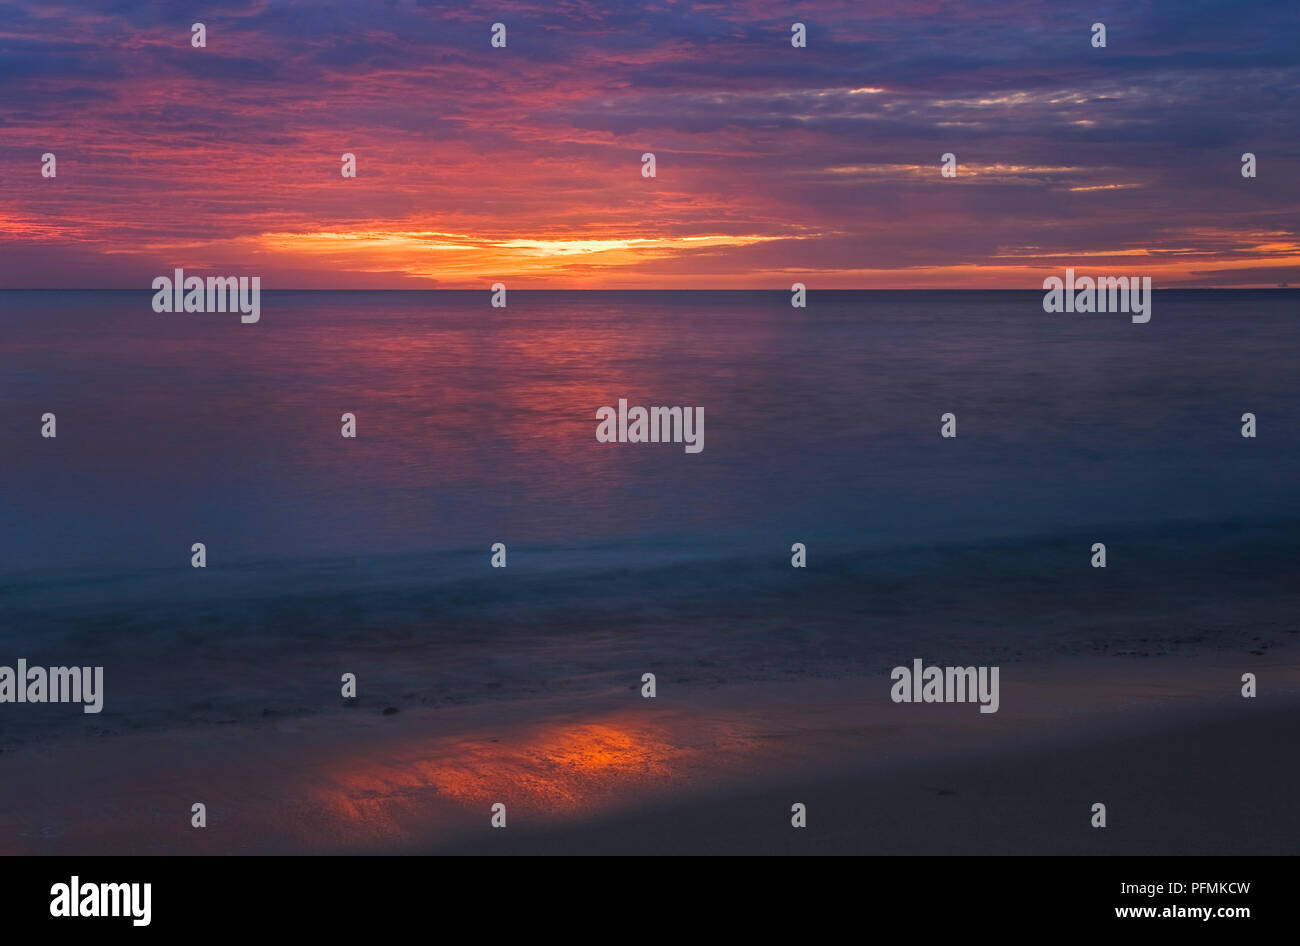 Dramatic sunrise on the beach, Pulau Weh island, Aceh province, Sumatra, Indonesia Stock Photo